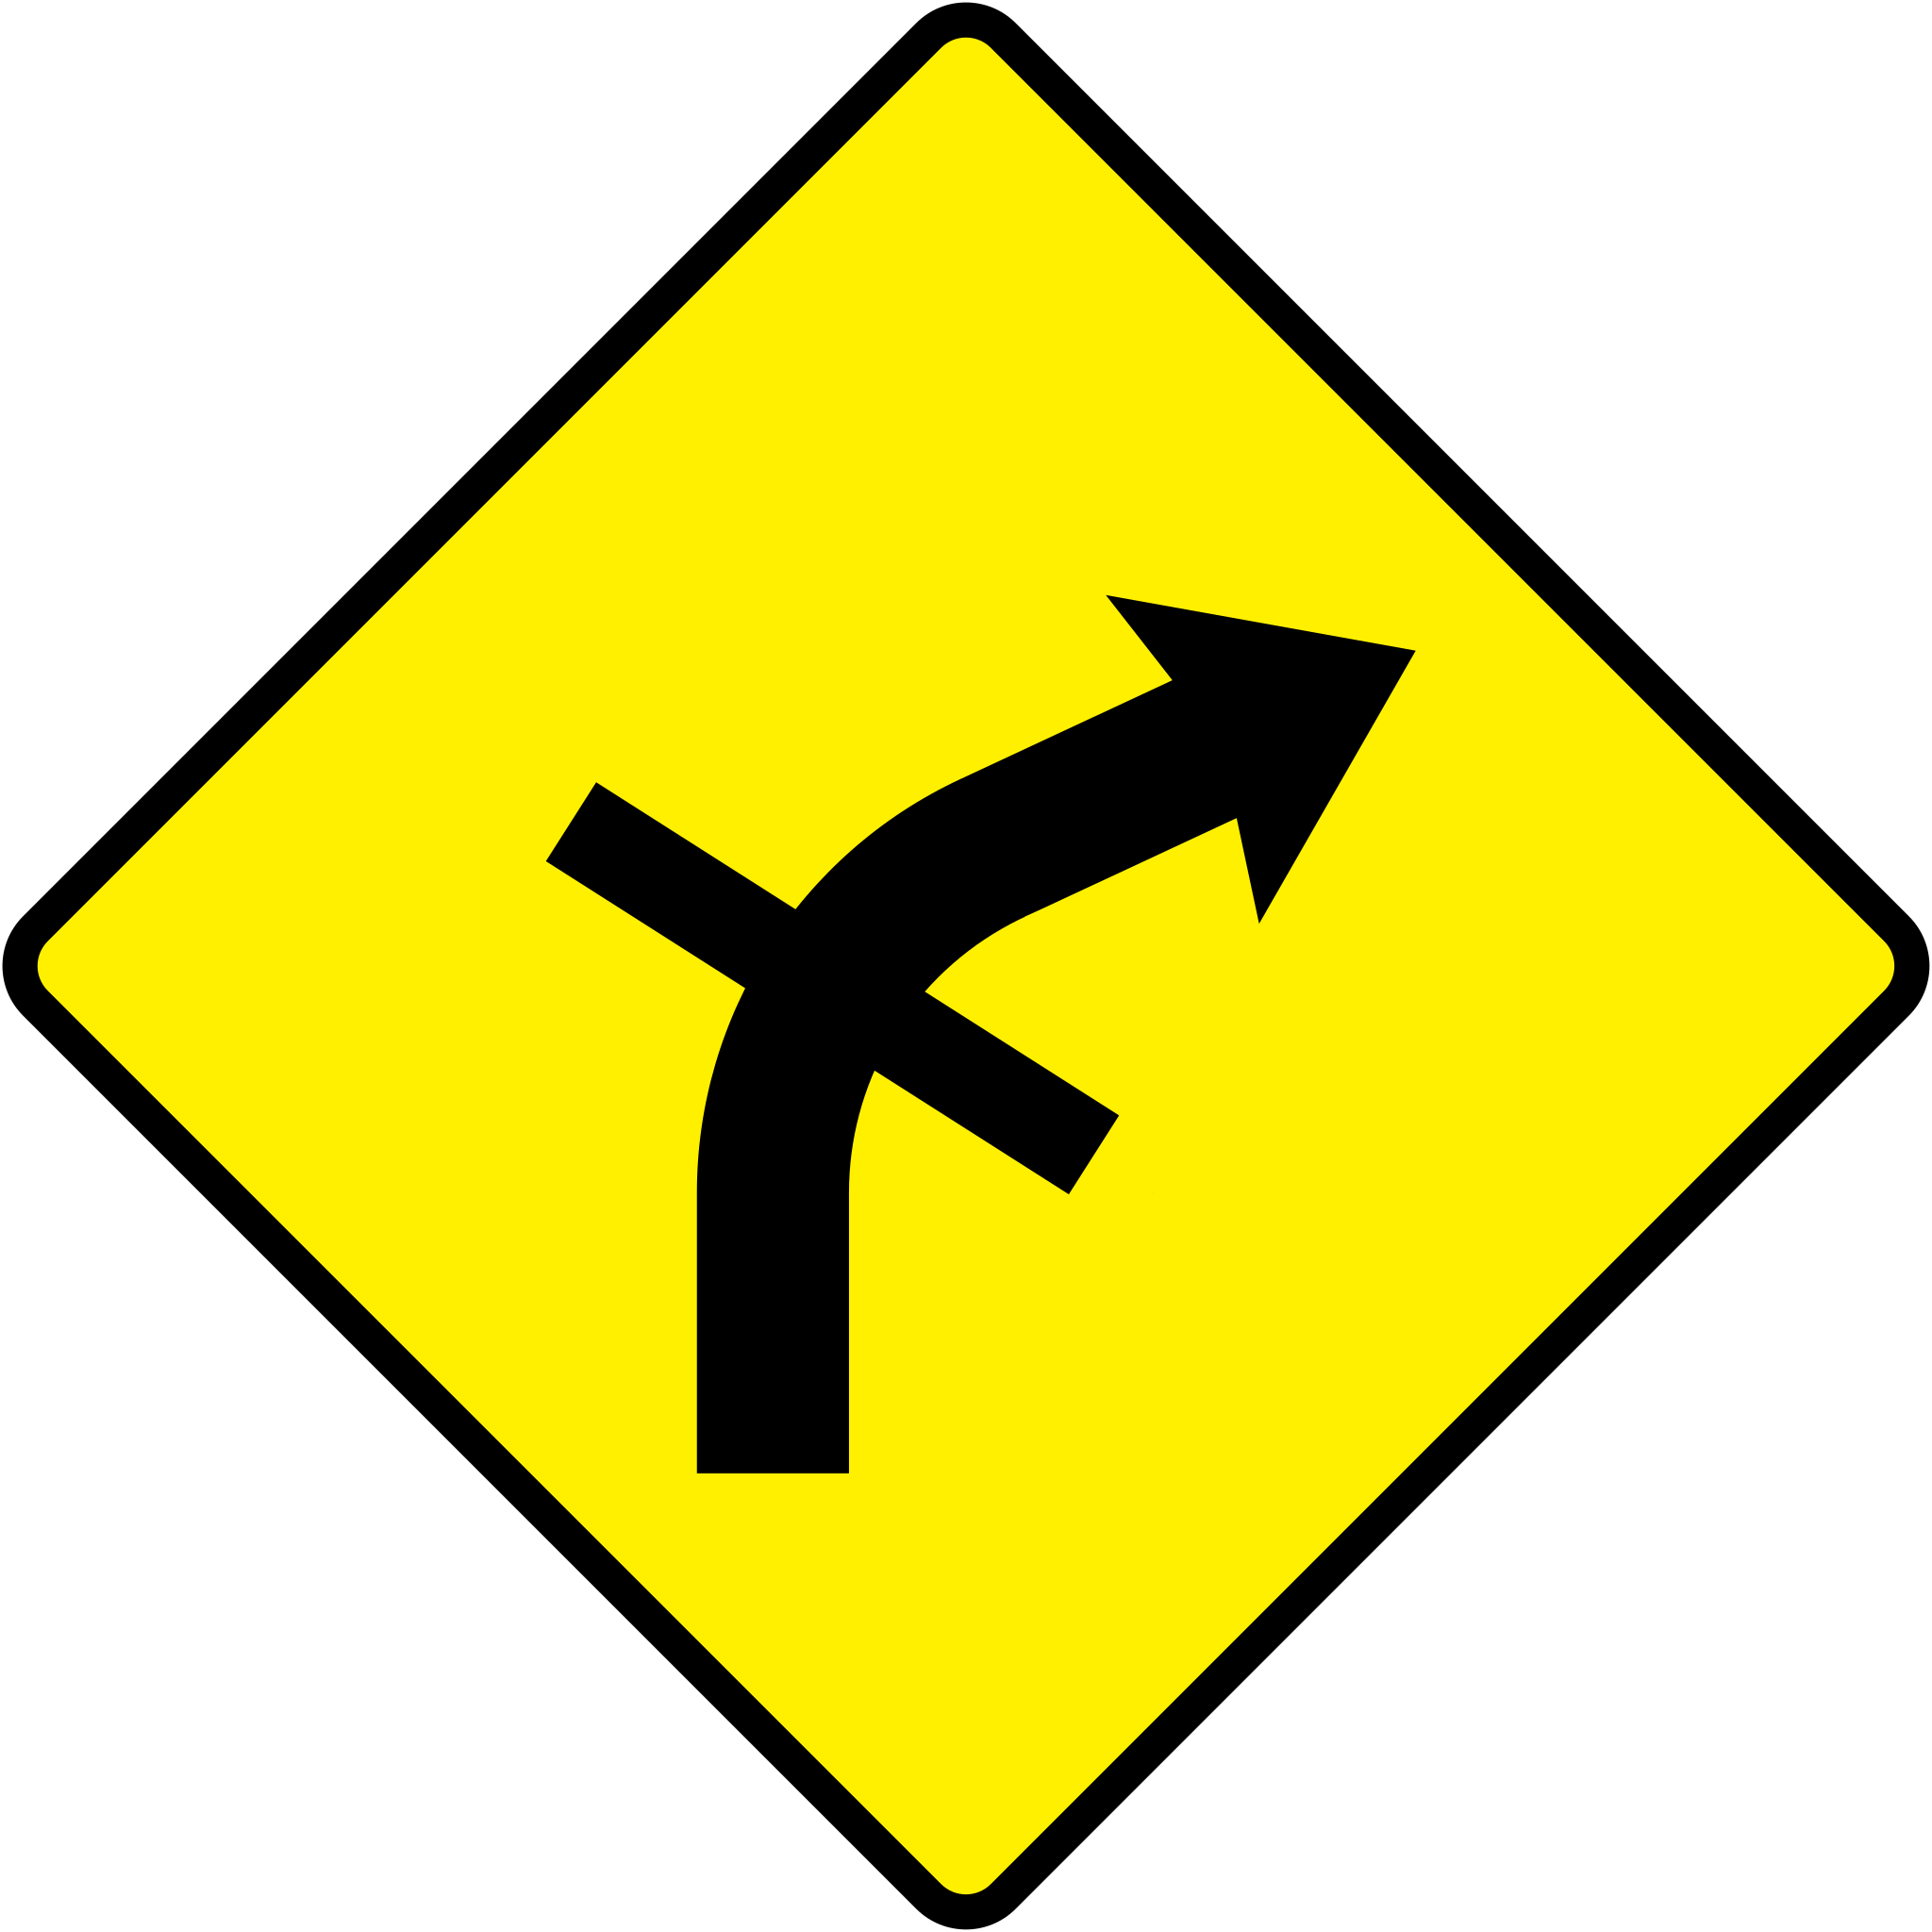 File:IE road sign W-011-R.svg - Wikipedia